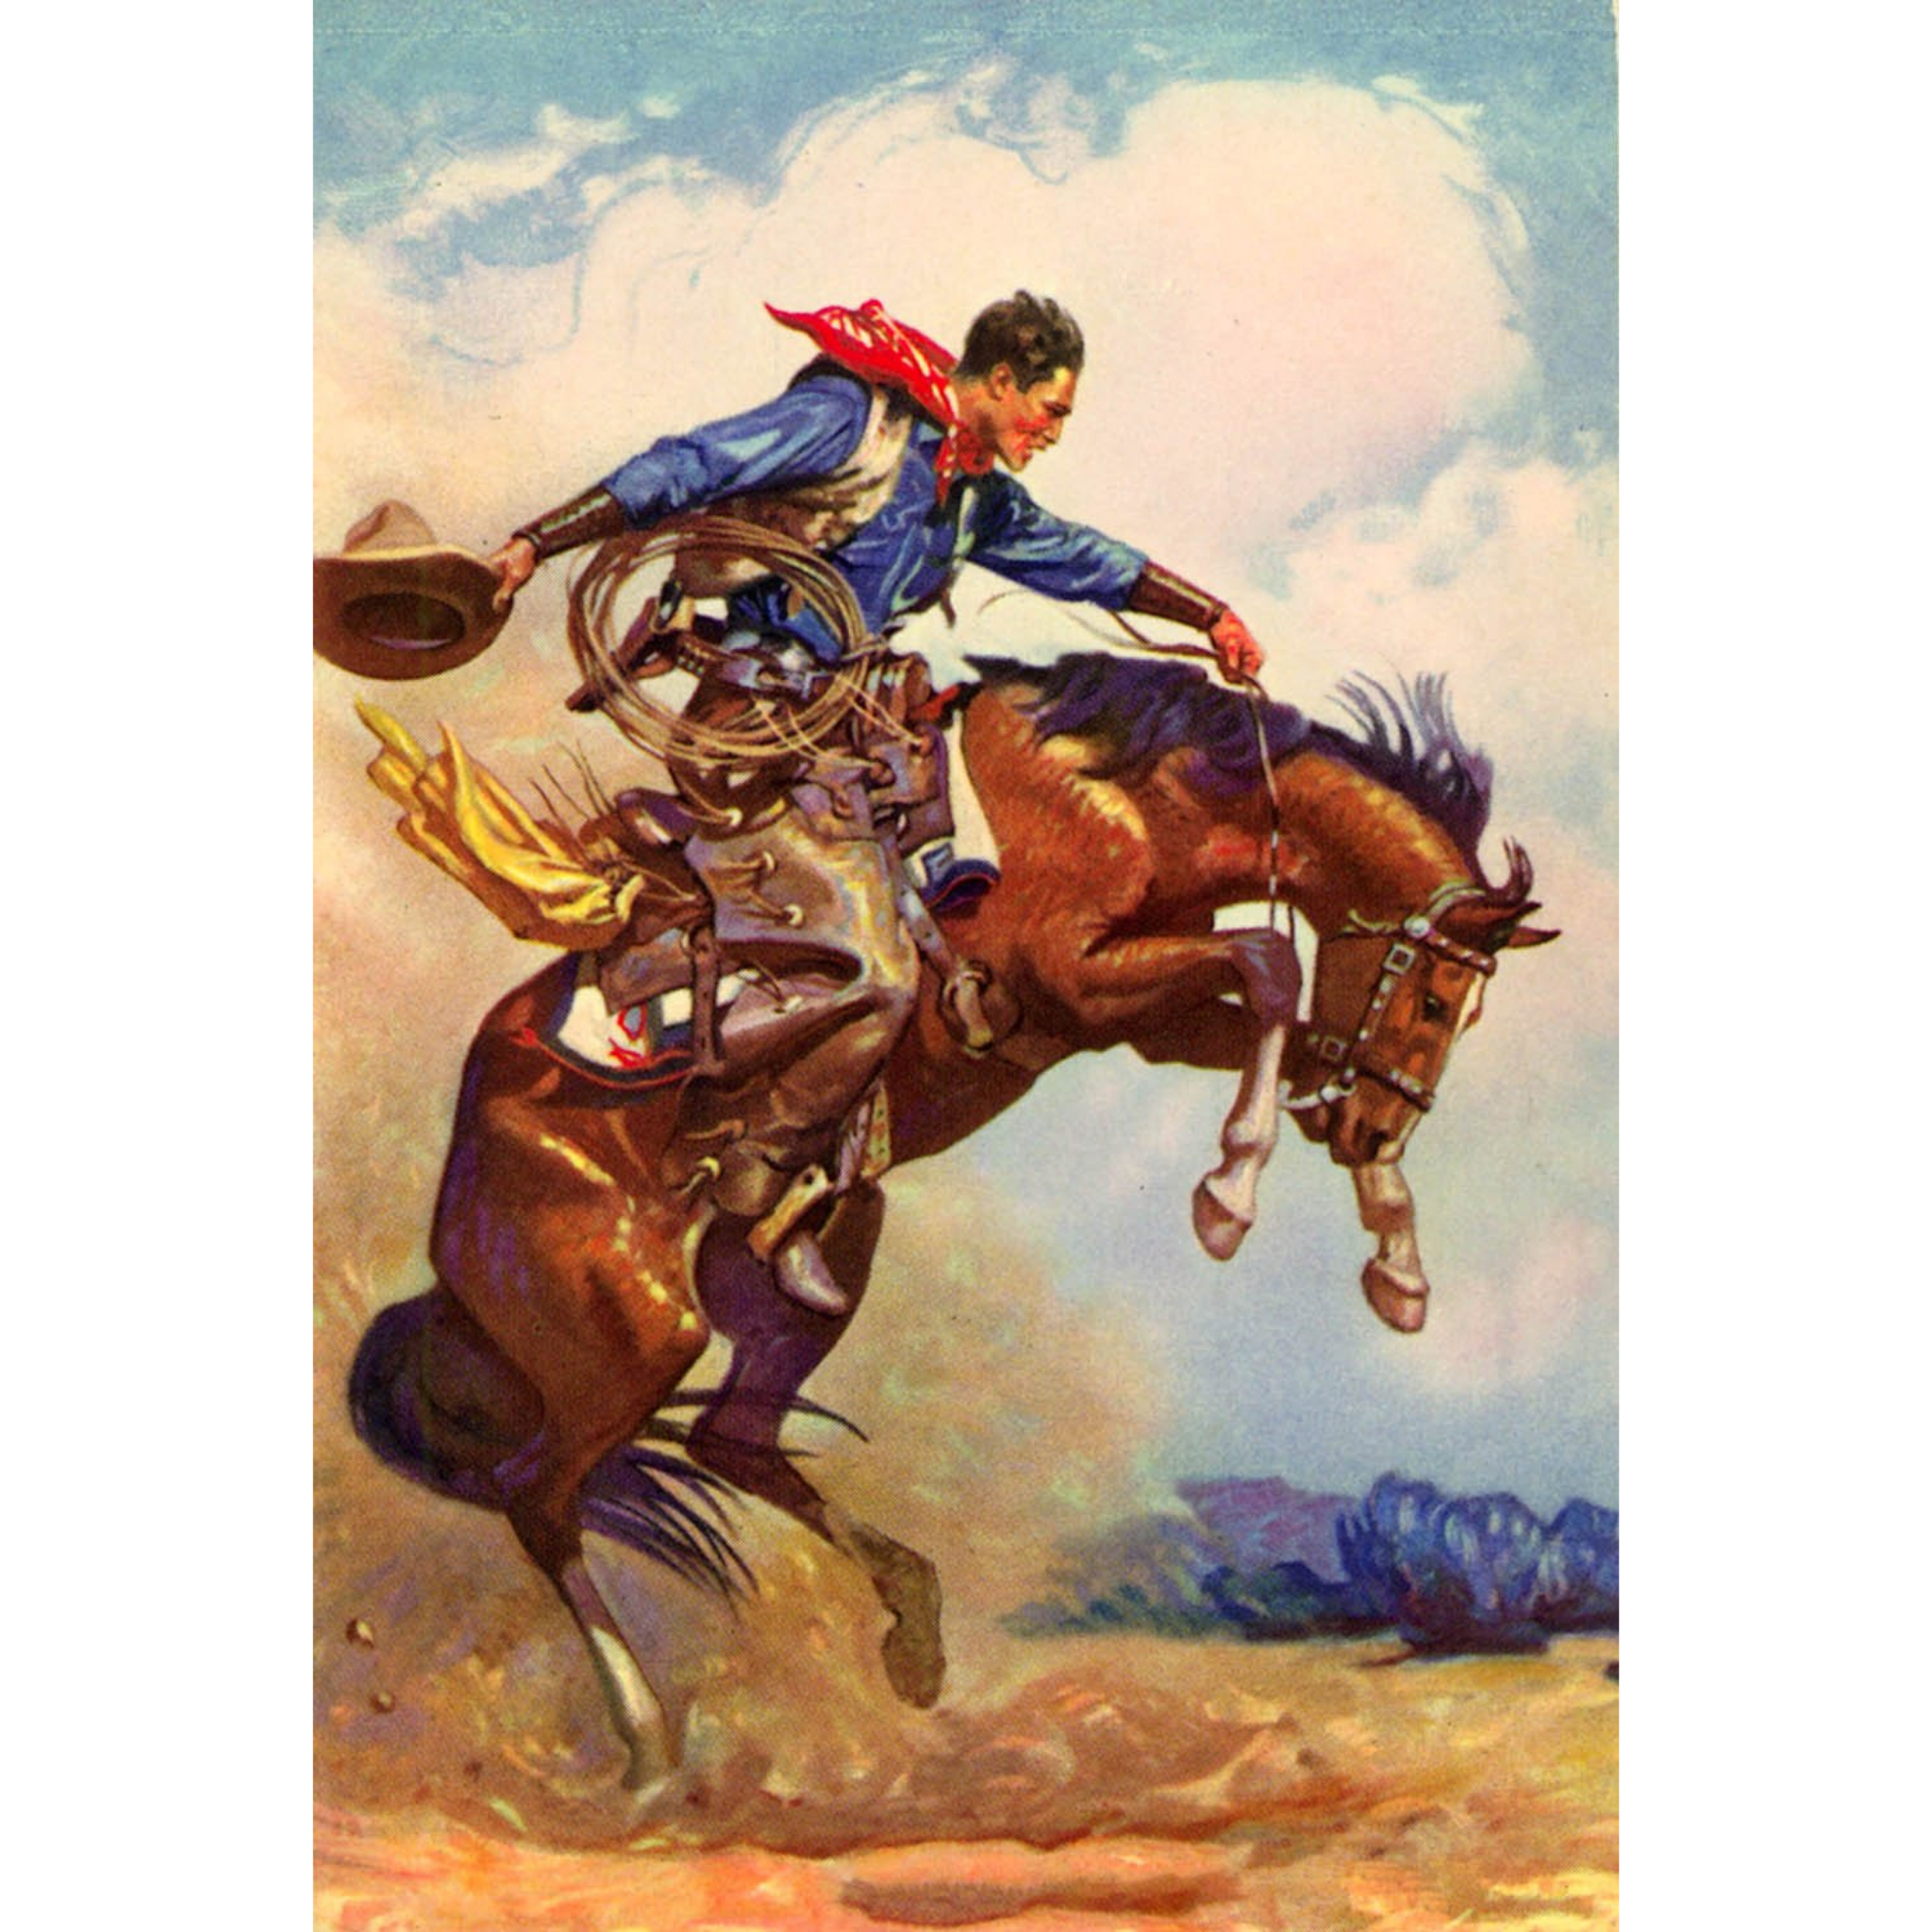 Cowboy on Bucking Bronco - ca. 1930 Lithograph